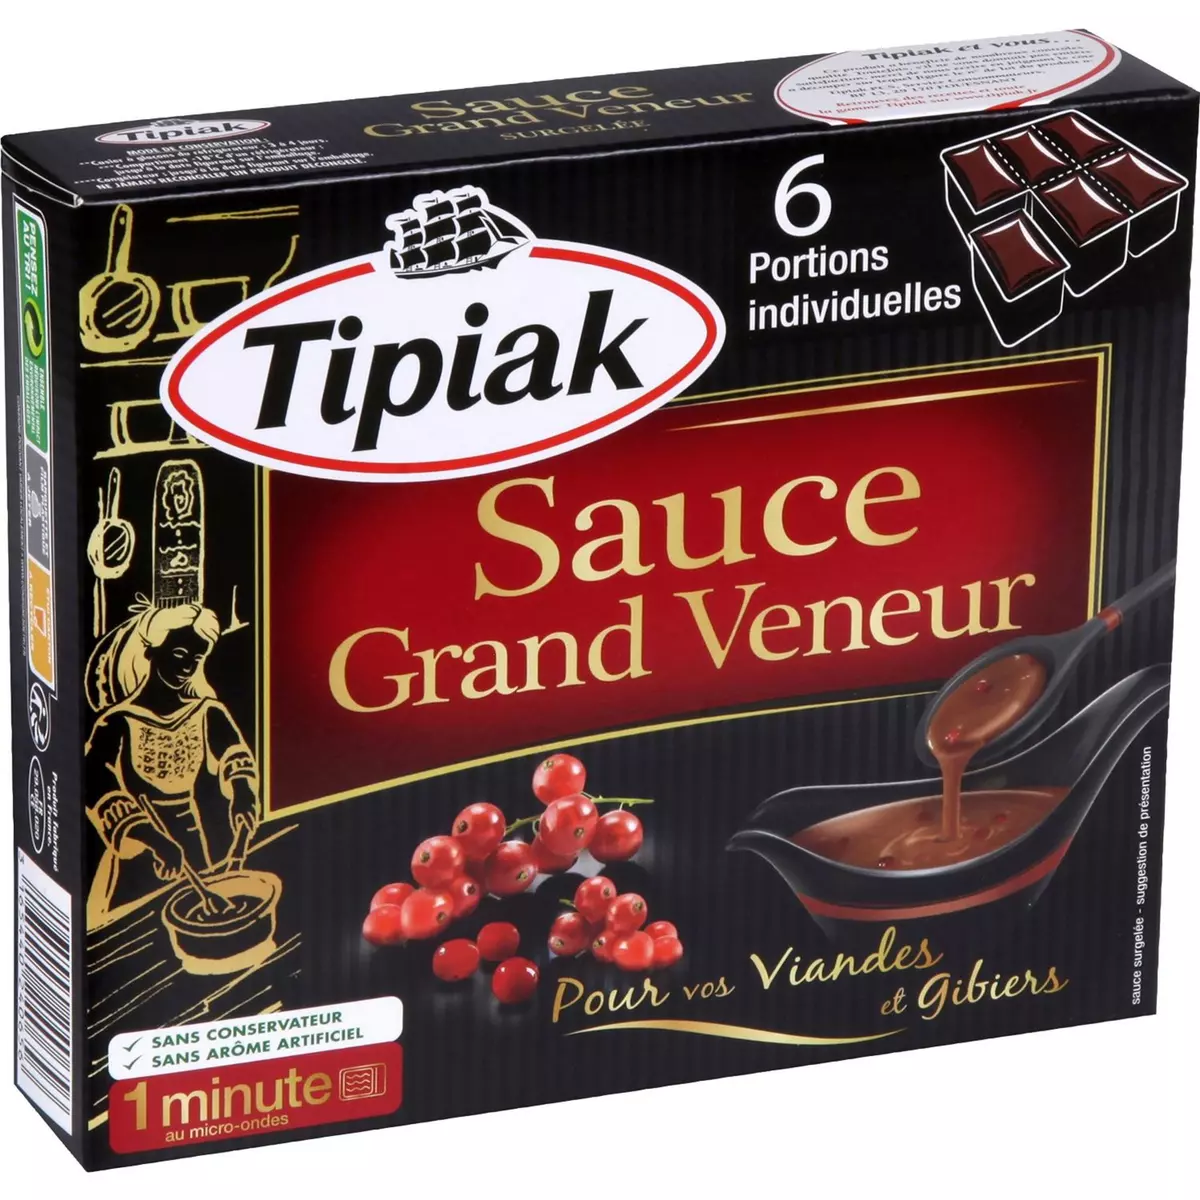 TIPIAK Sauce grand veneur 6 portions 6x50g